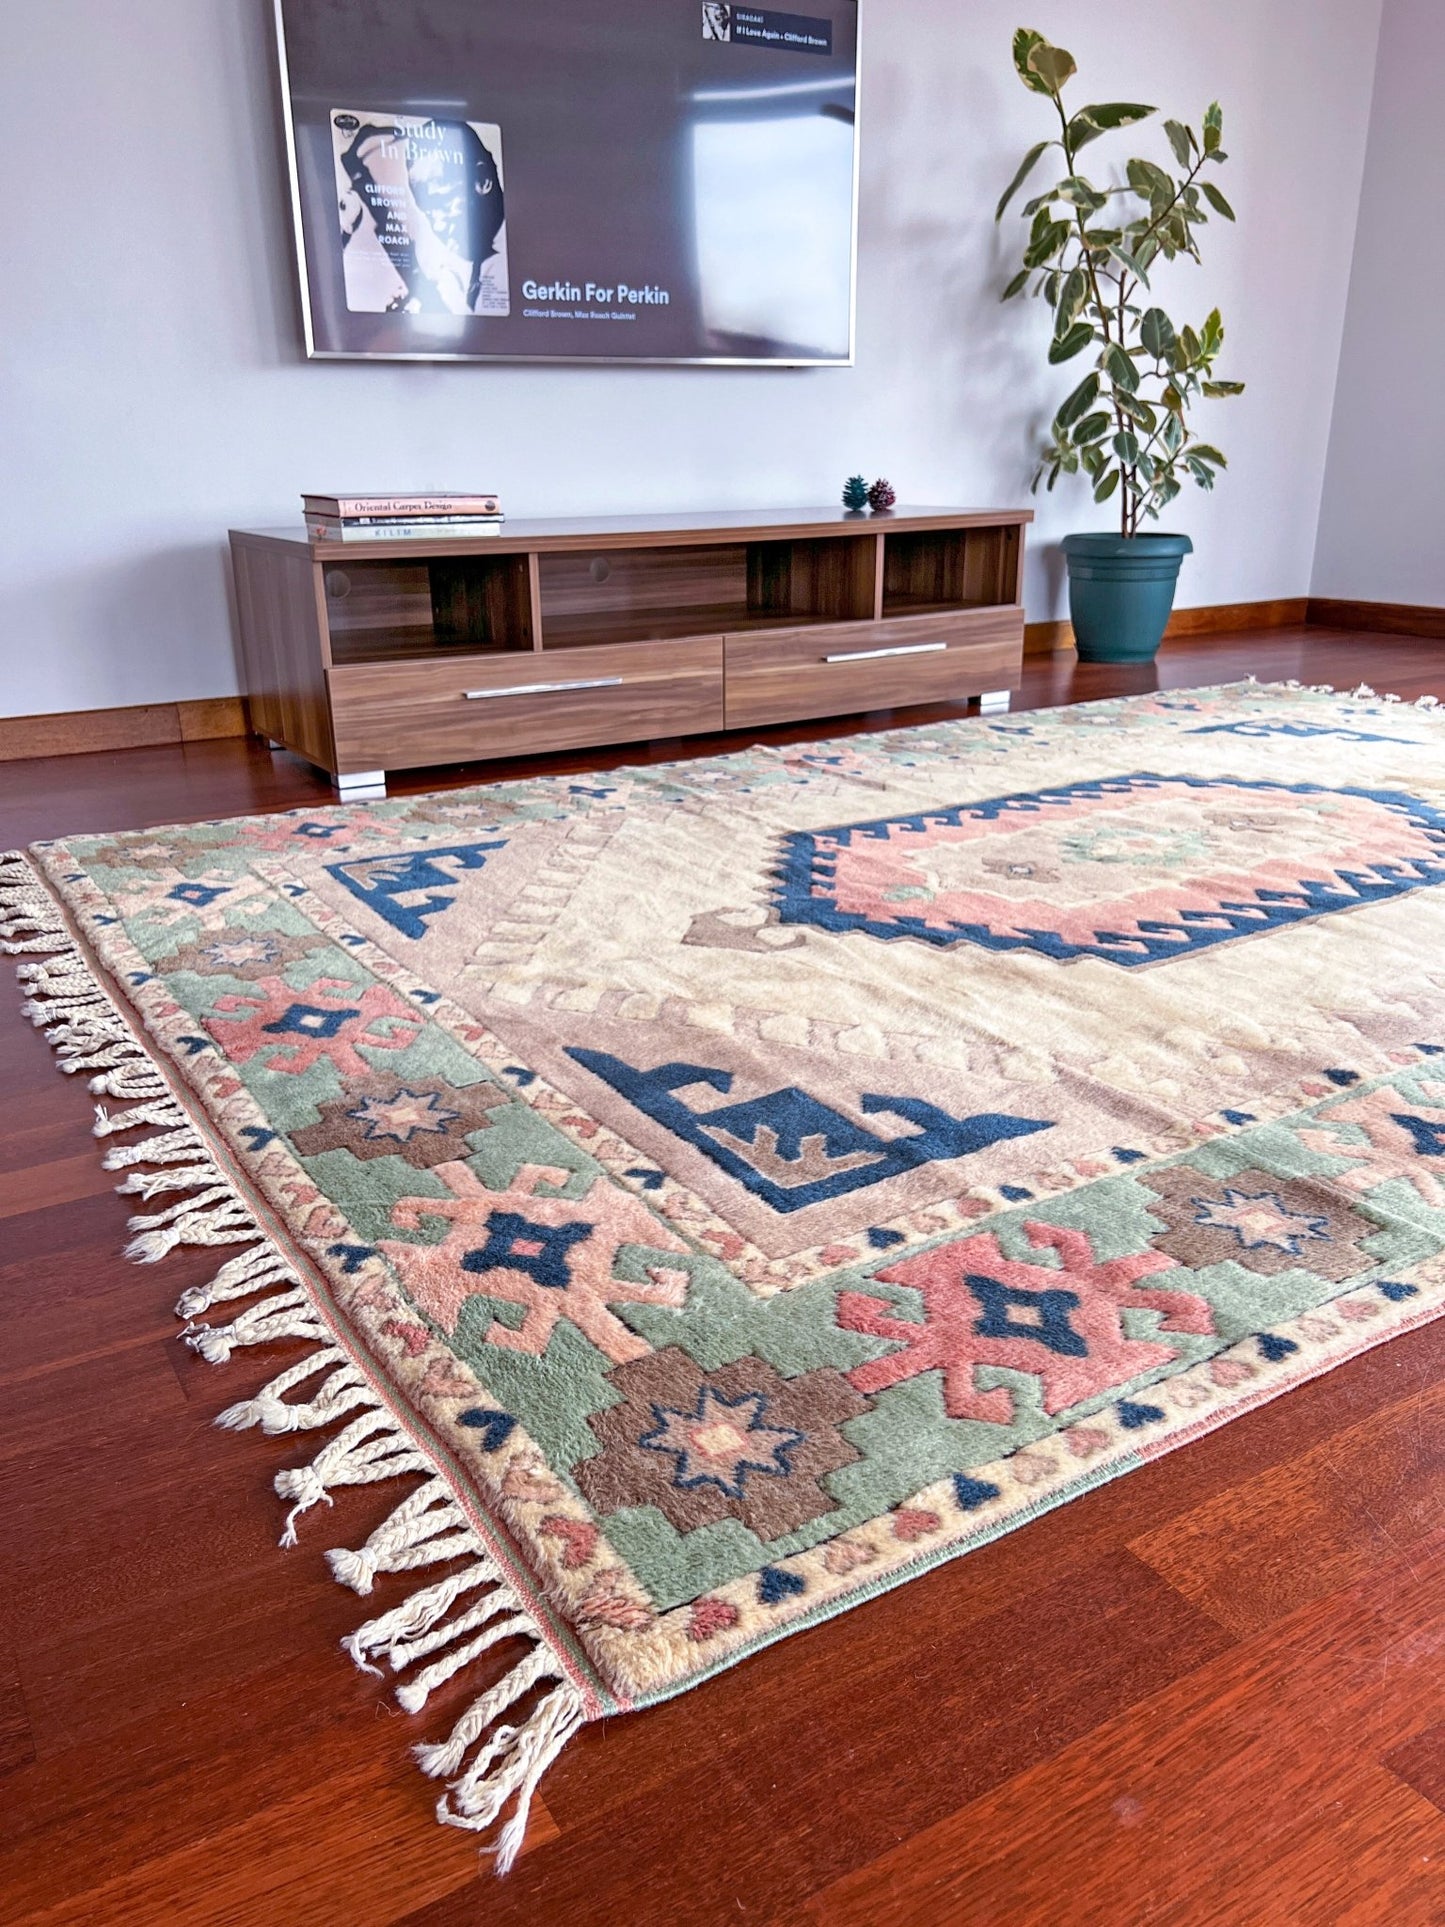 konya handmade wool large turkish rug shop san francisco bay area palo alto. Vintage rug store berkeley rug shop online